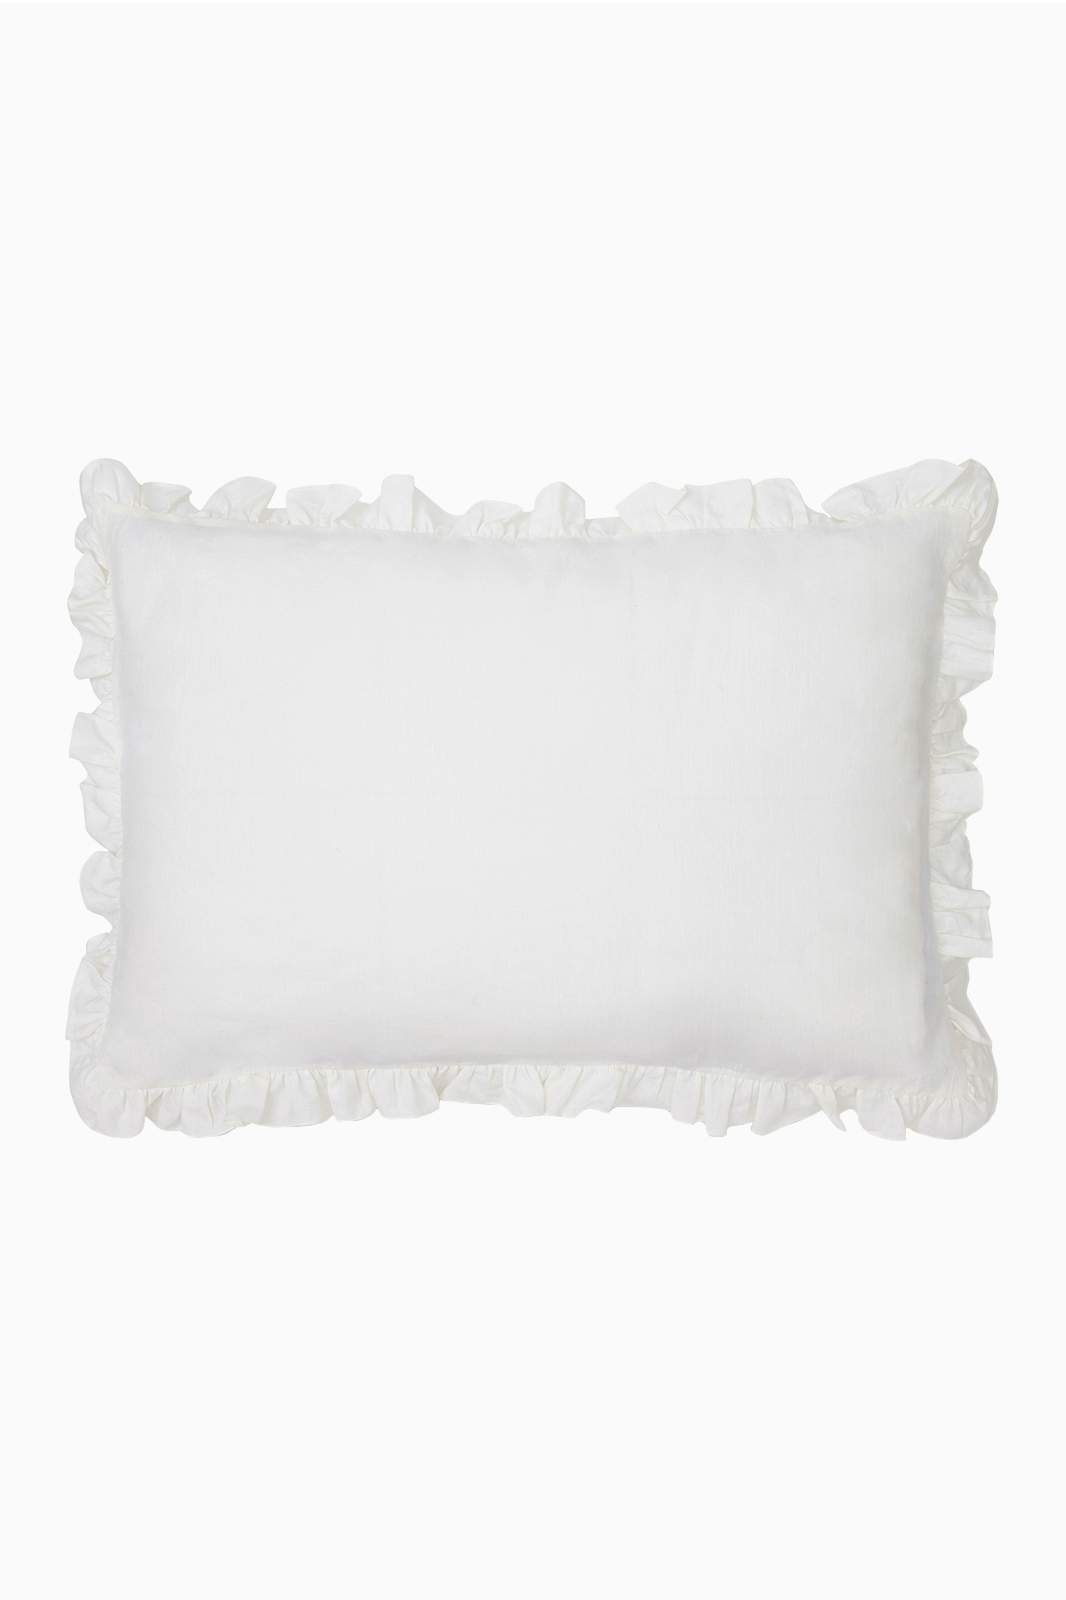 arkitaip Pillowslips The Ruffled Casita Linen Pillowslips Set in White